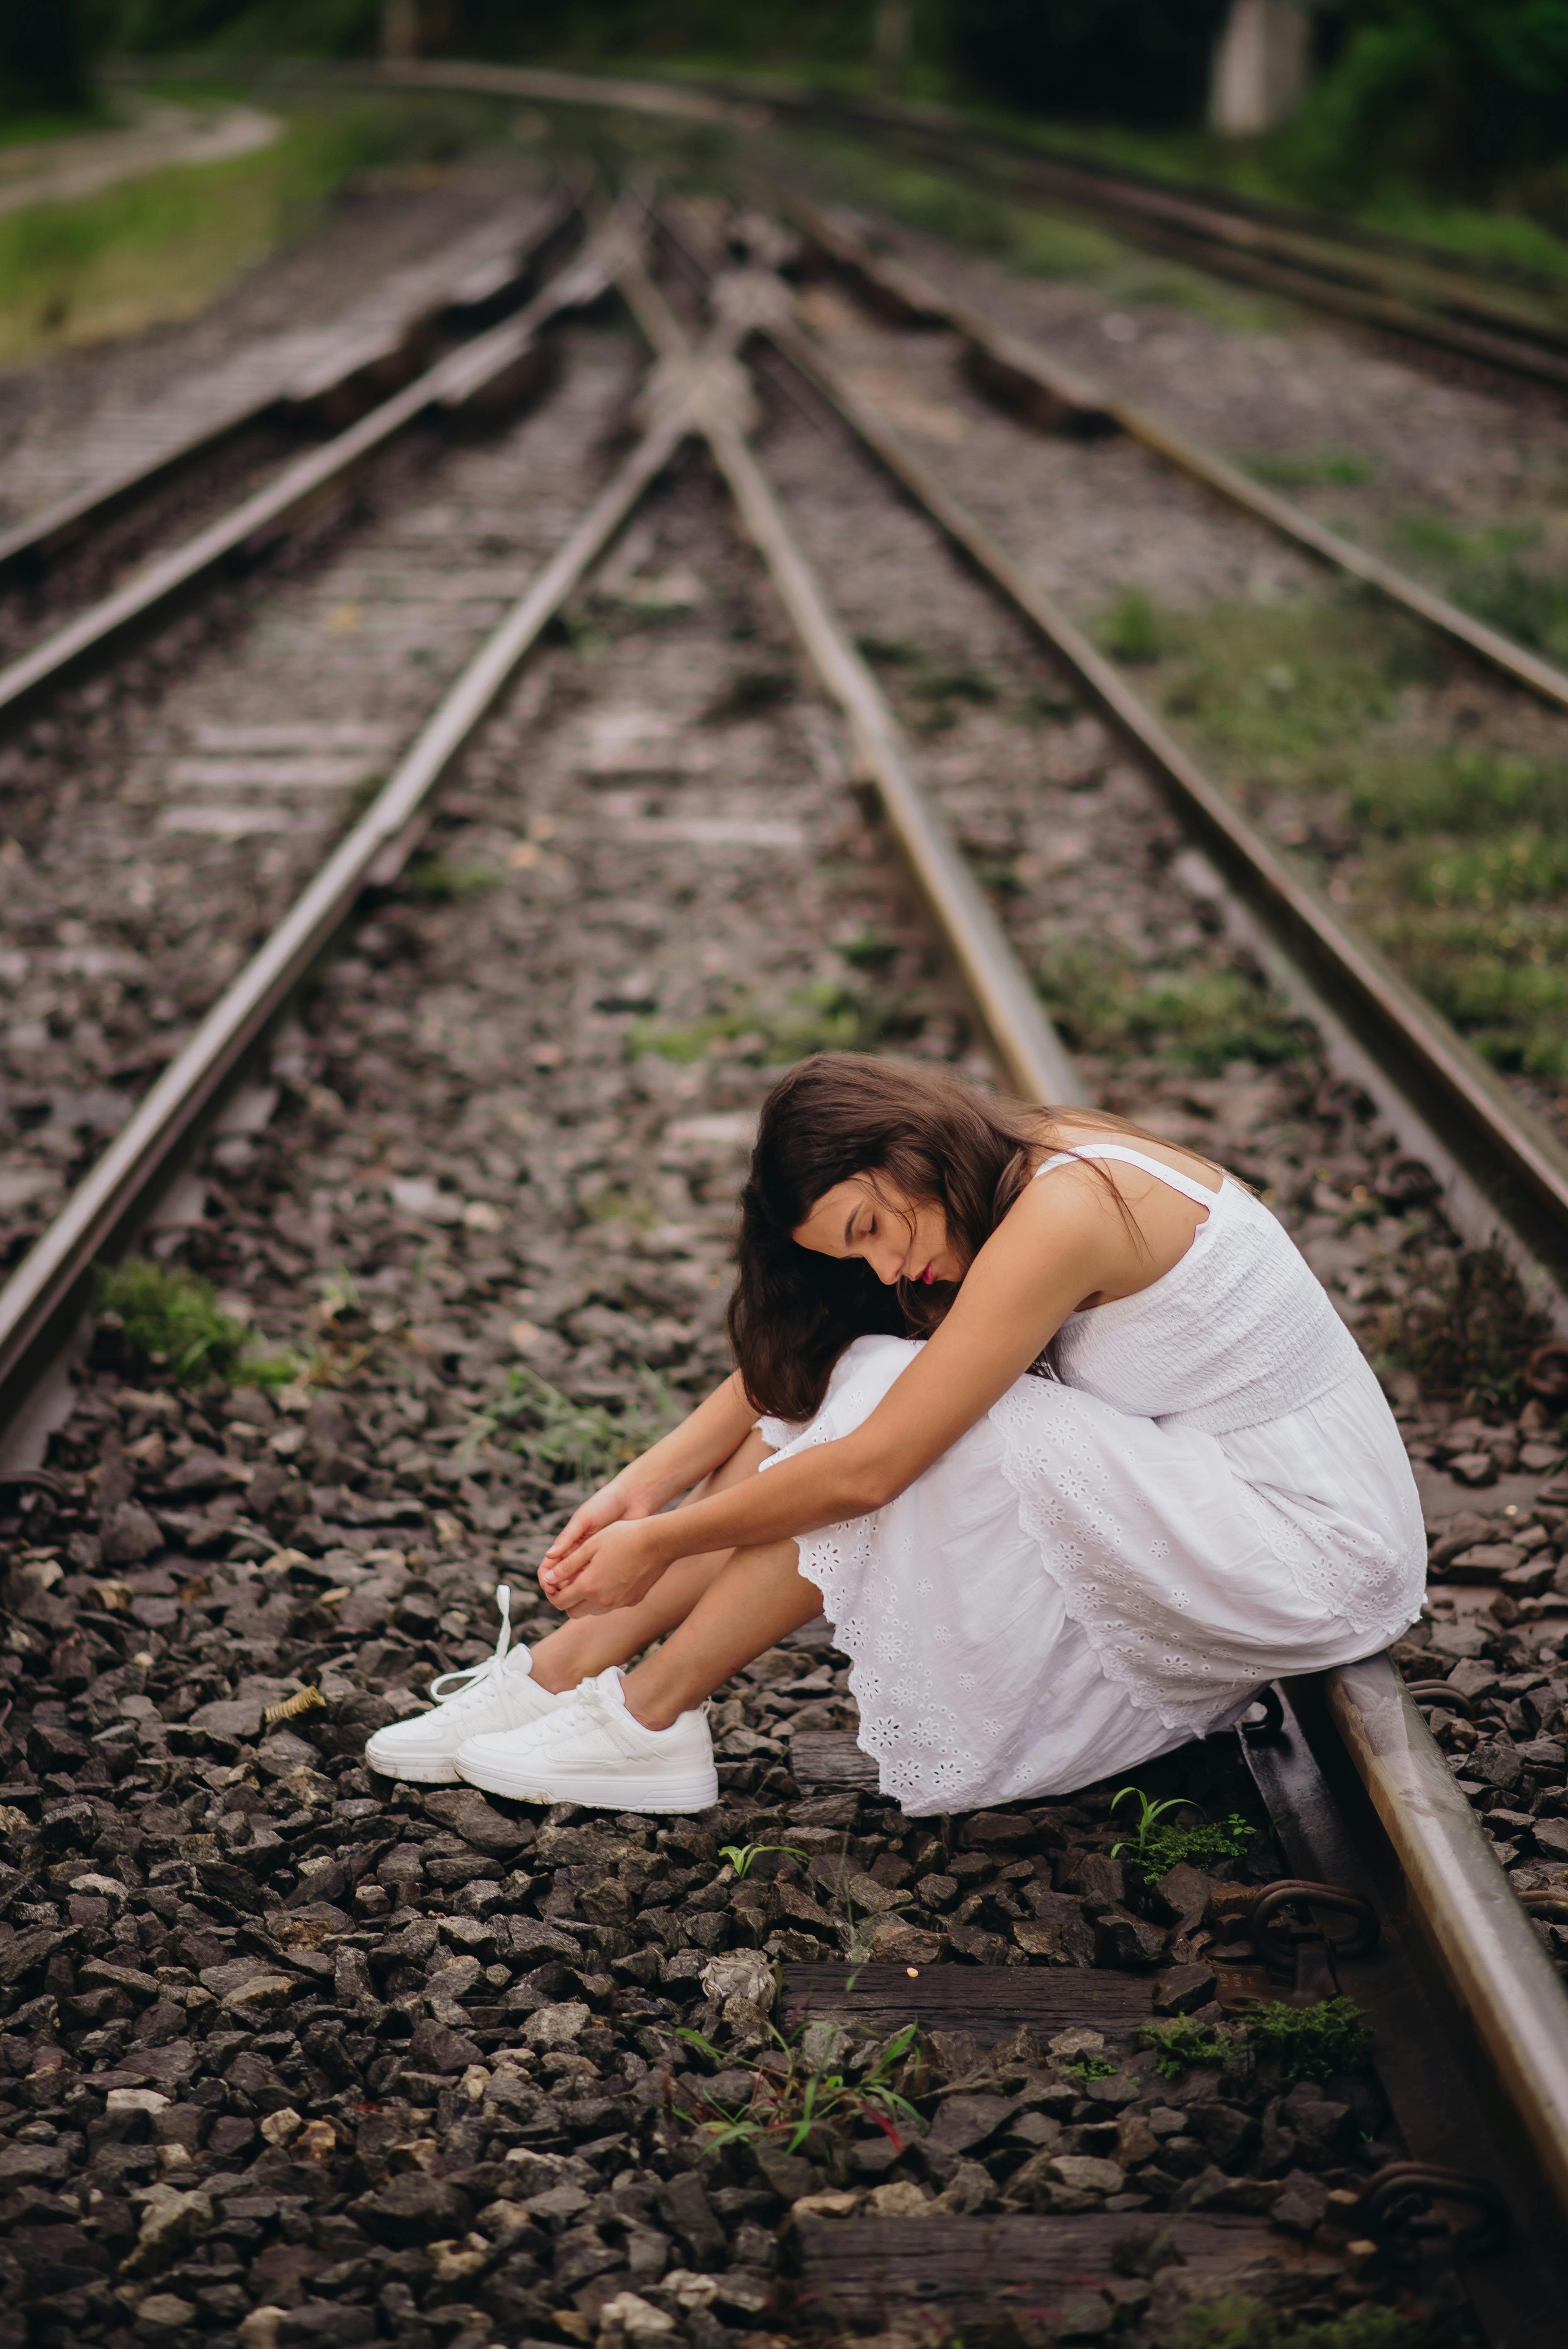 Railway track photoshoot poses for Girls - YouTube